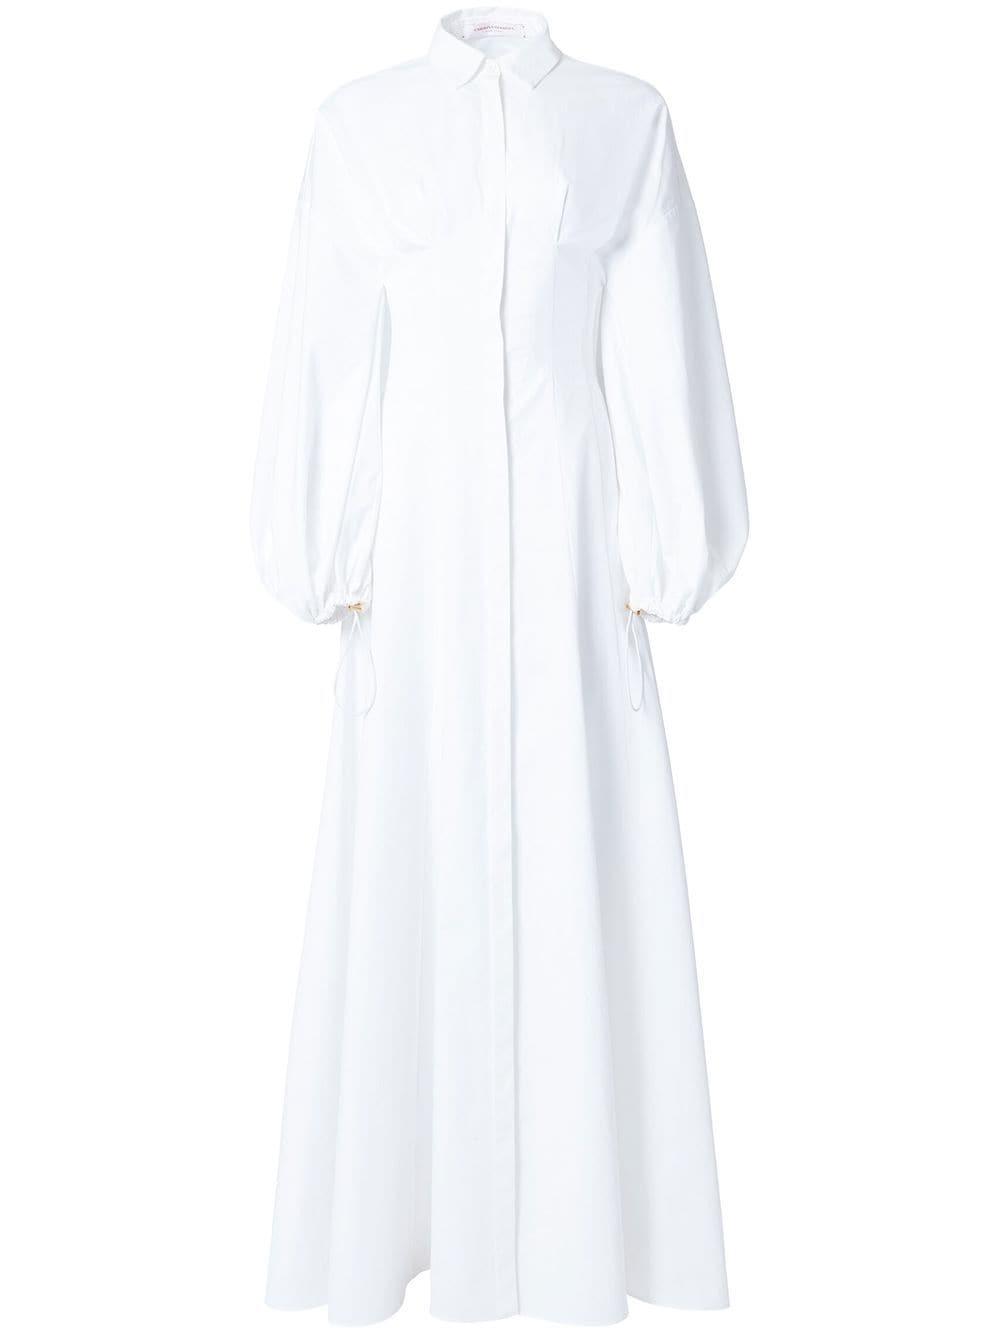 Carolina Herrera Balloon-sleeves Belted Dress in White | Lyst